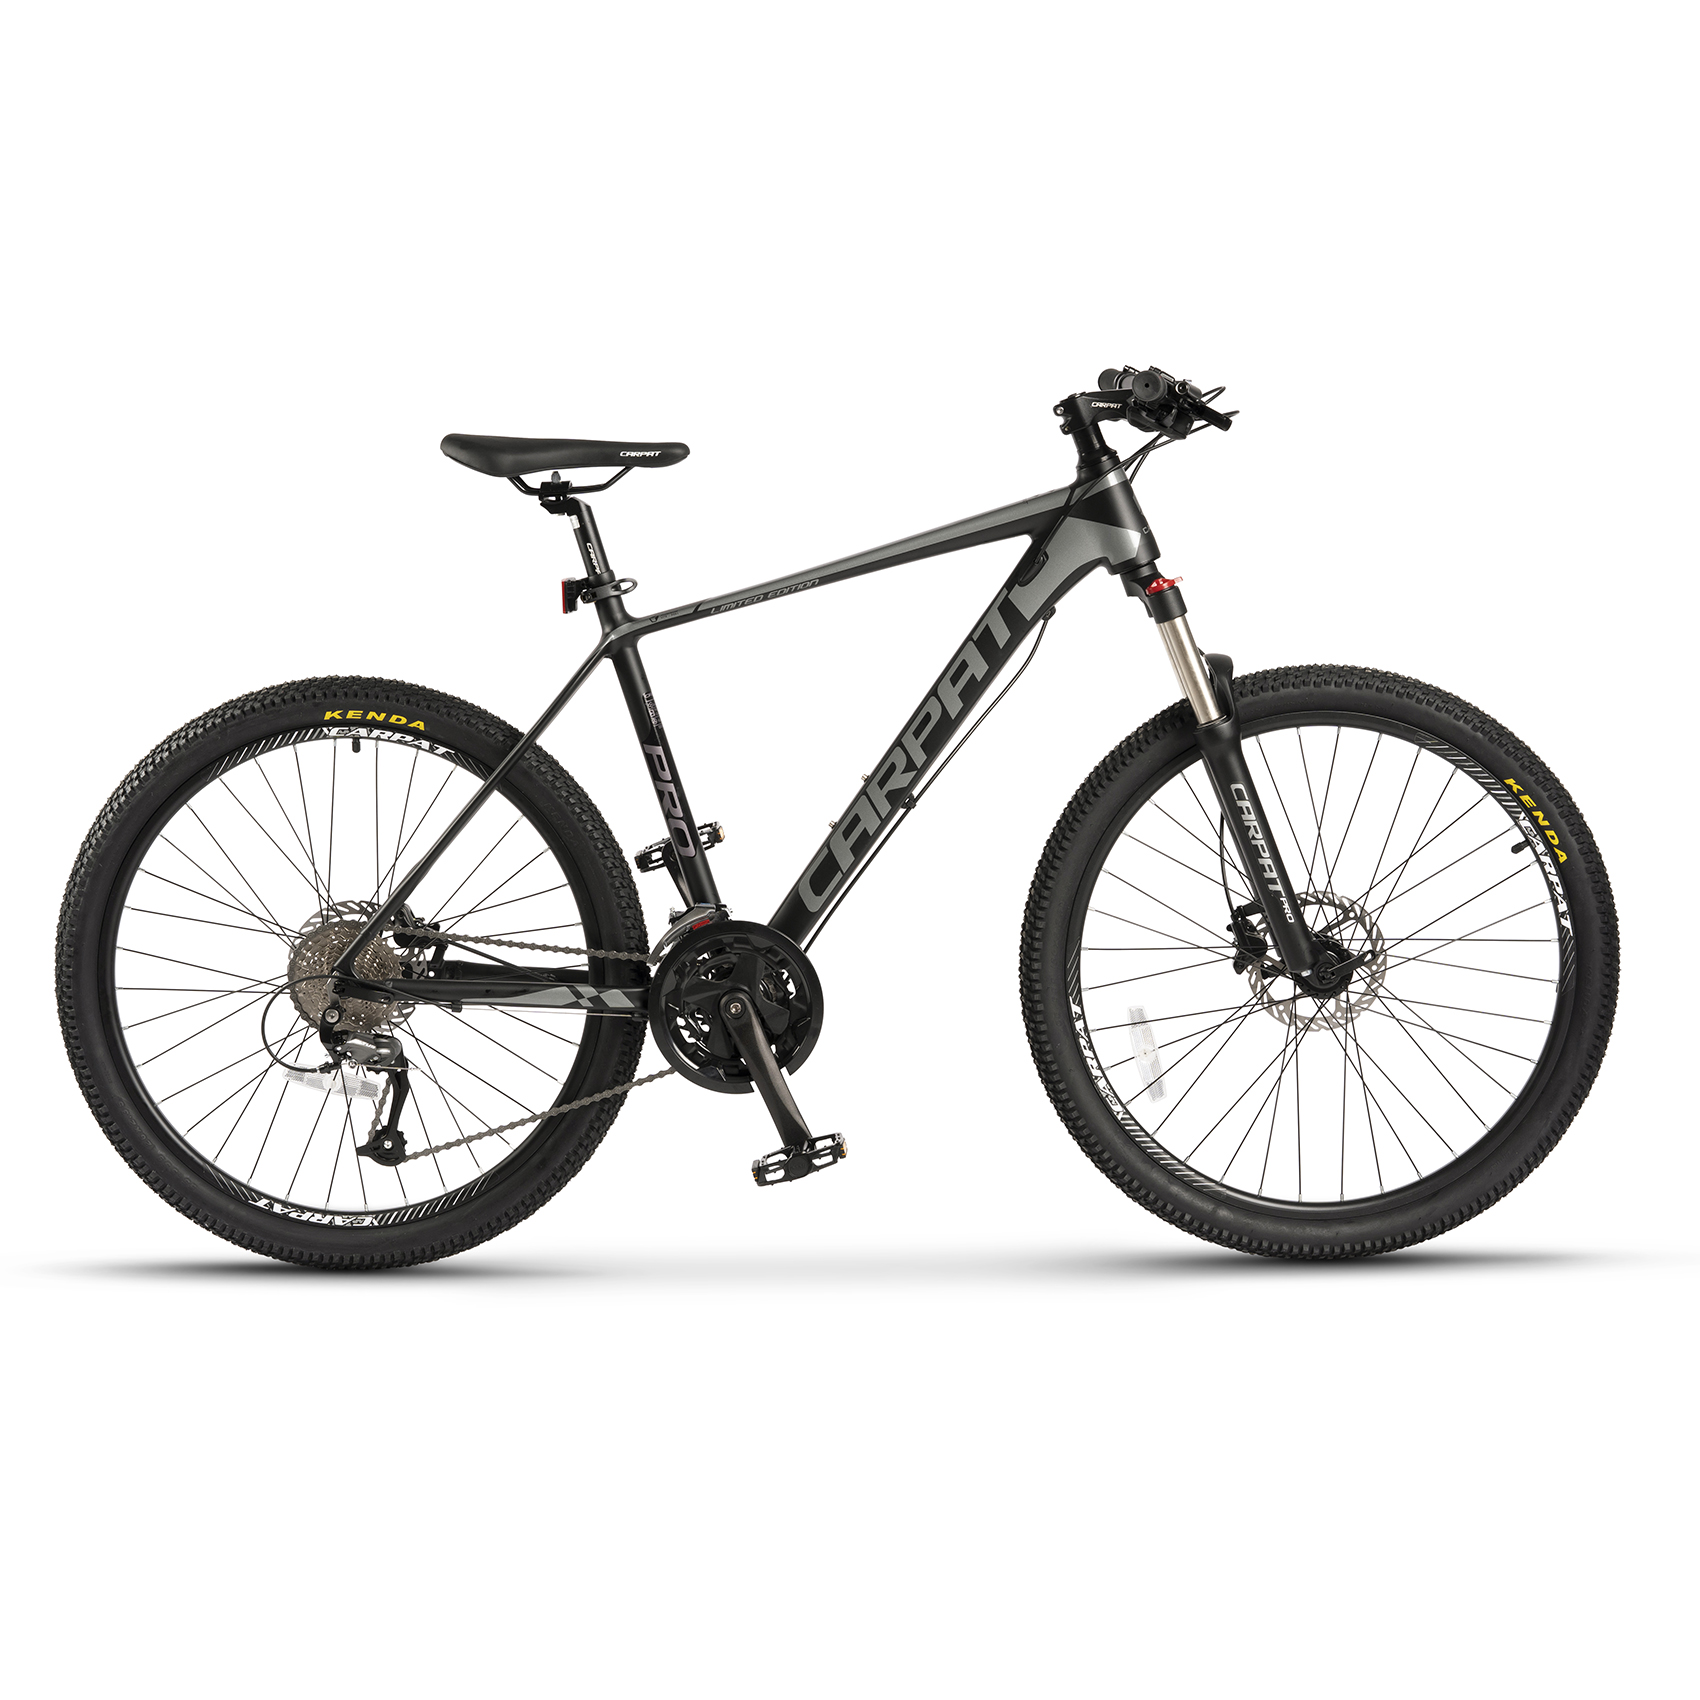 PROMO BICICLETE - Bicicleta MTB-HT Carpat PRO C26227H LIMITED EDITION 26", Negru/Gri, https:carpatsport.ro